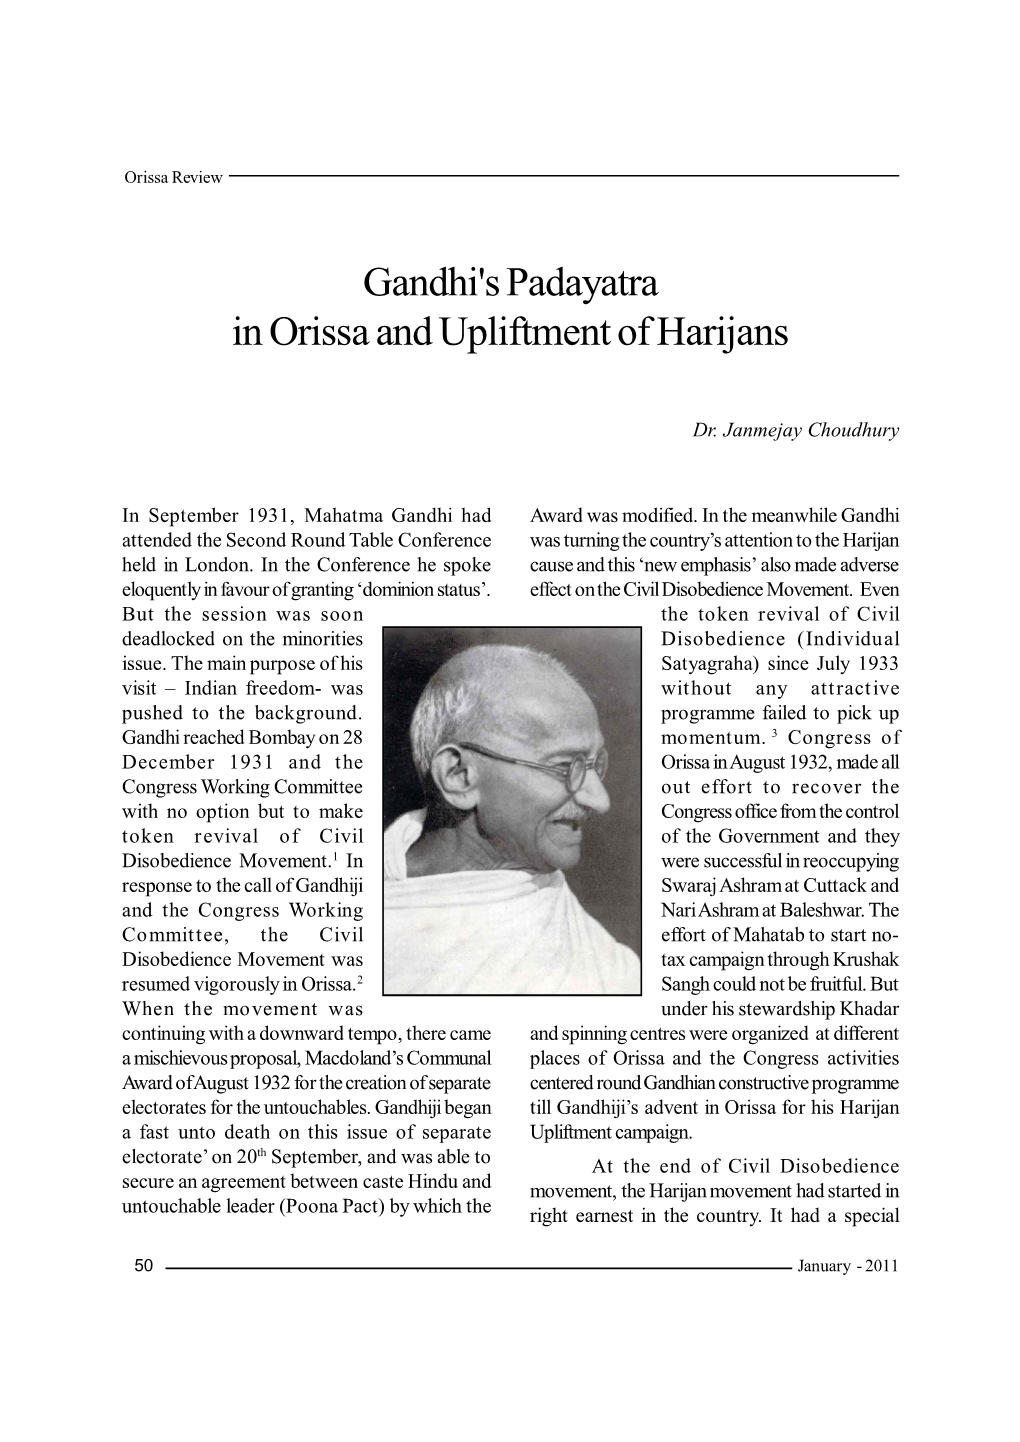 Gandhi's Padayatra in Orissa and Upliftment of Harijans